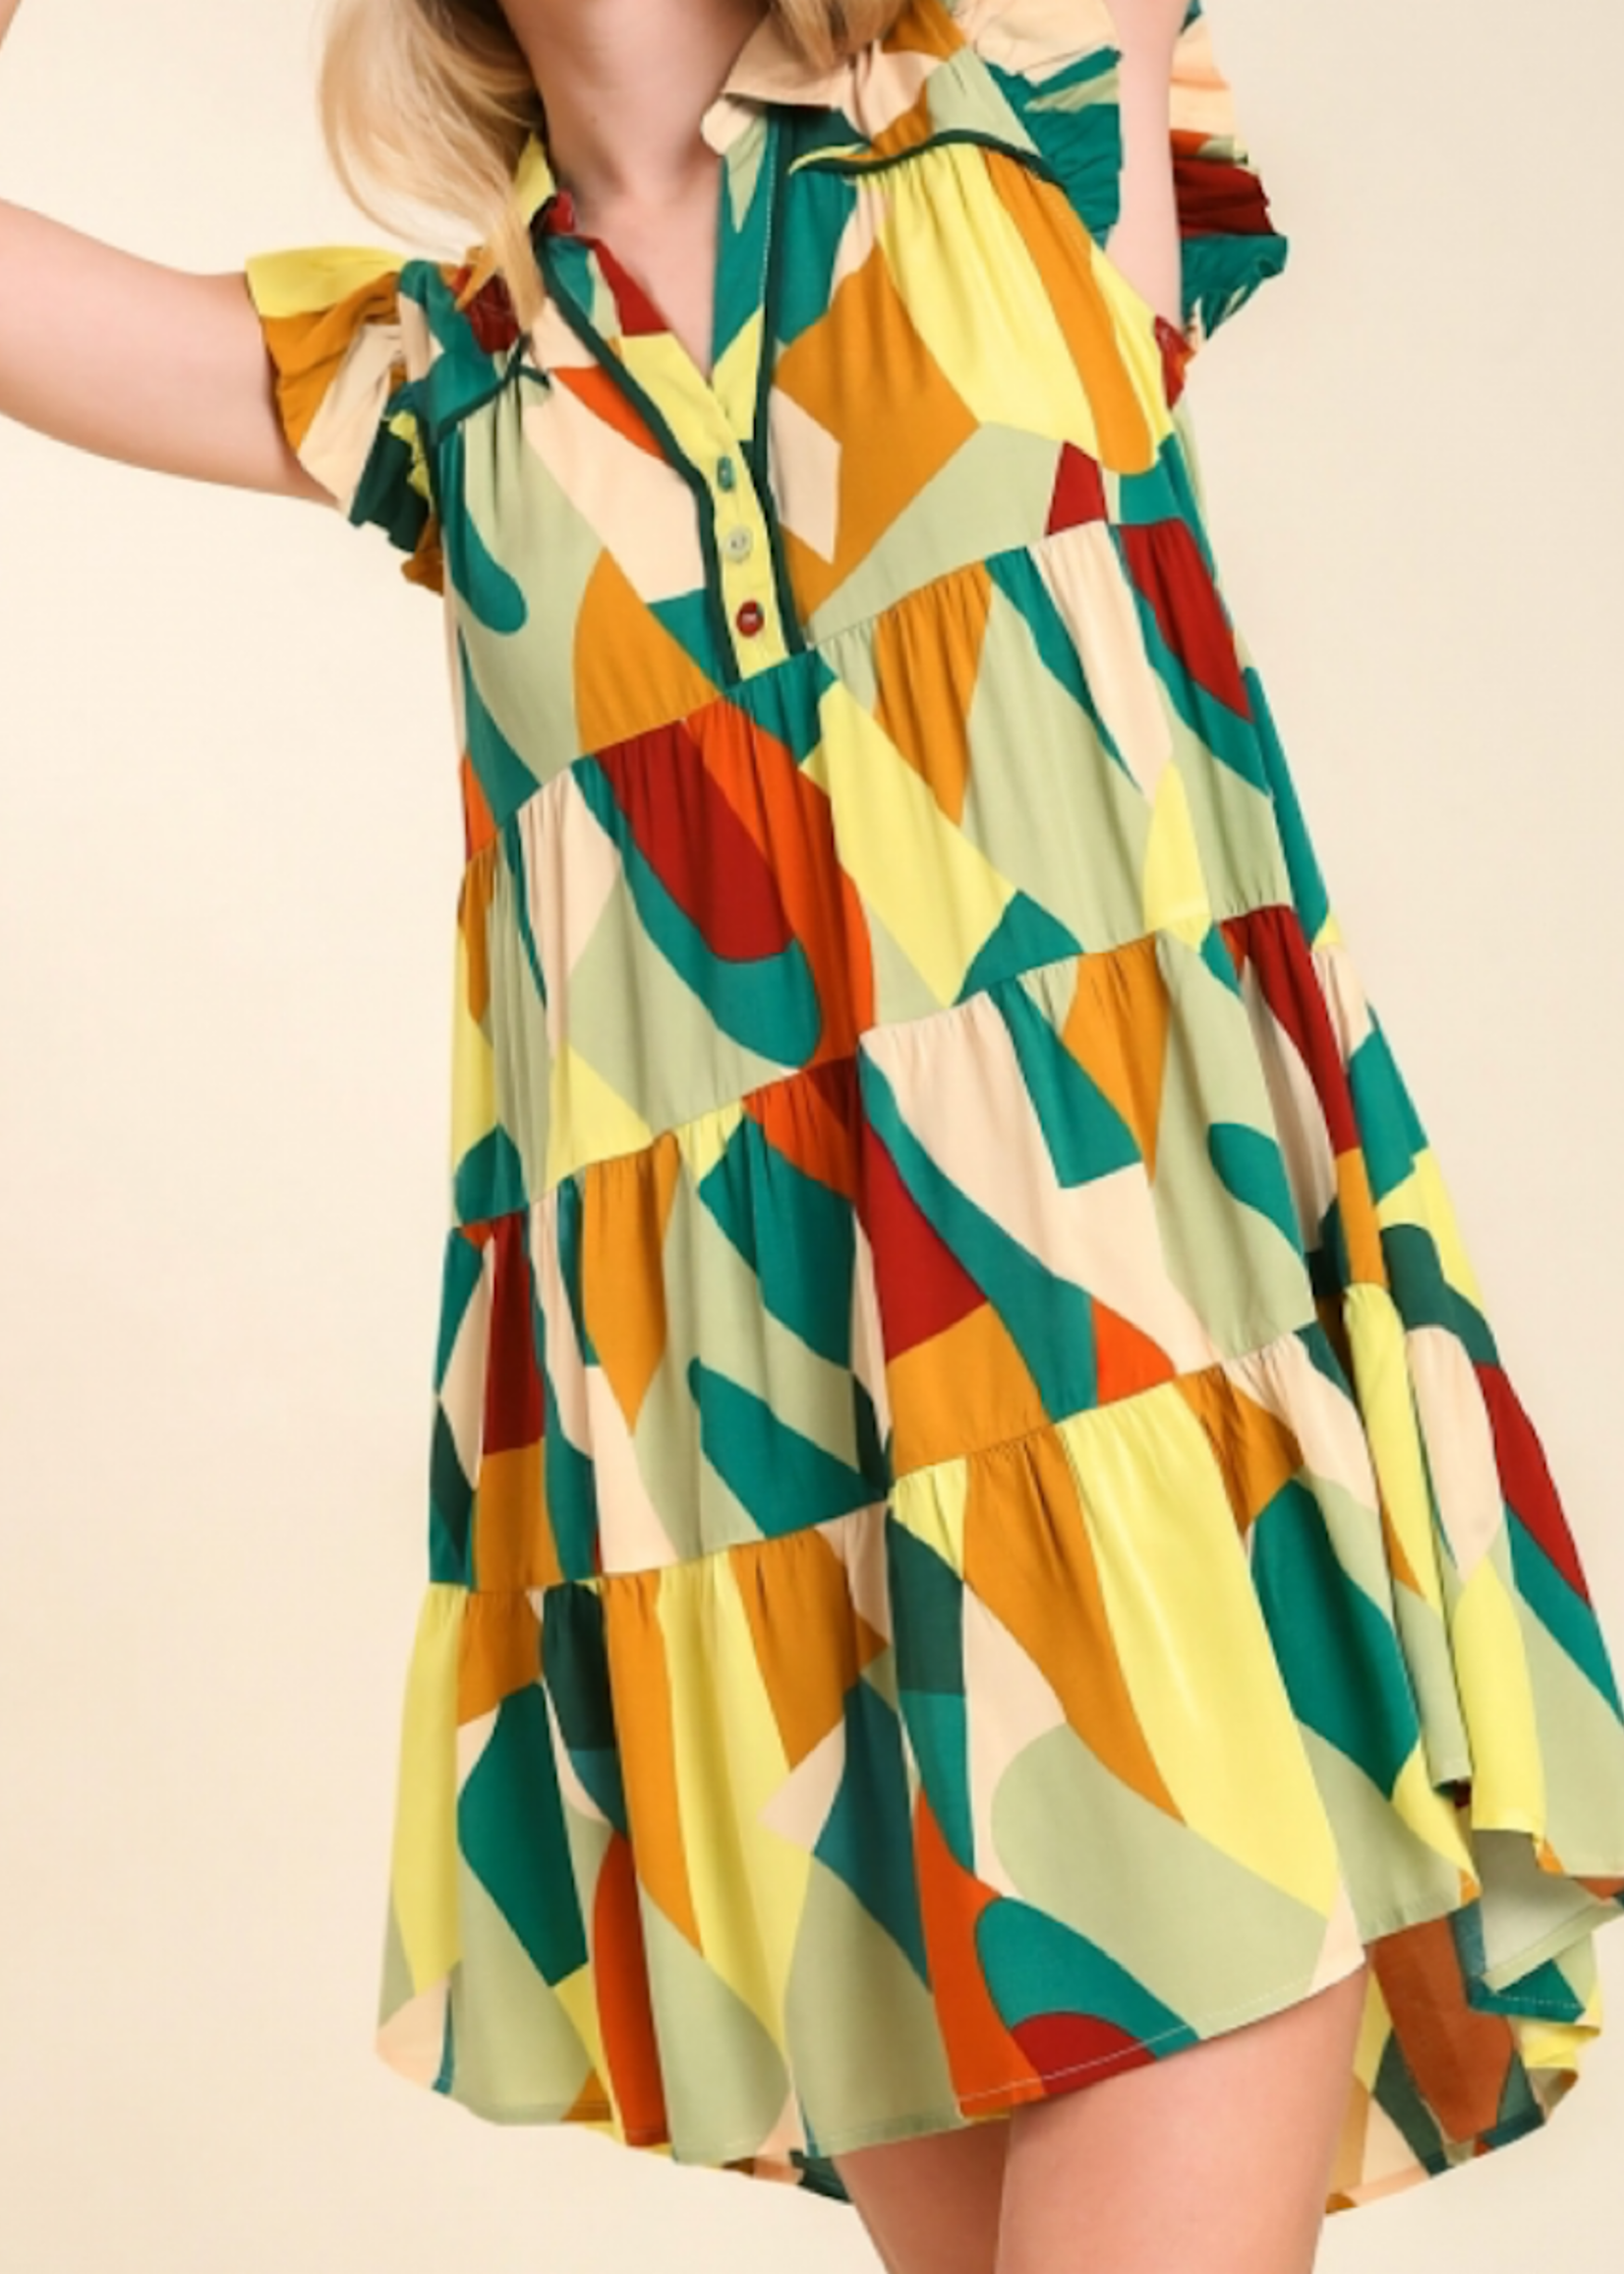 Teal/Sage Multi Color Abstract Print Dress